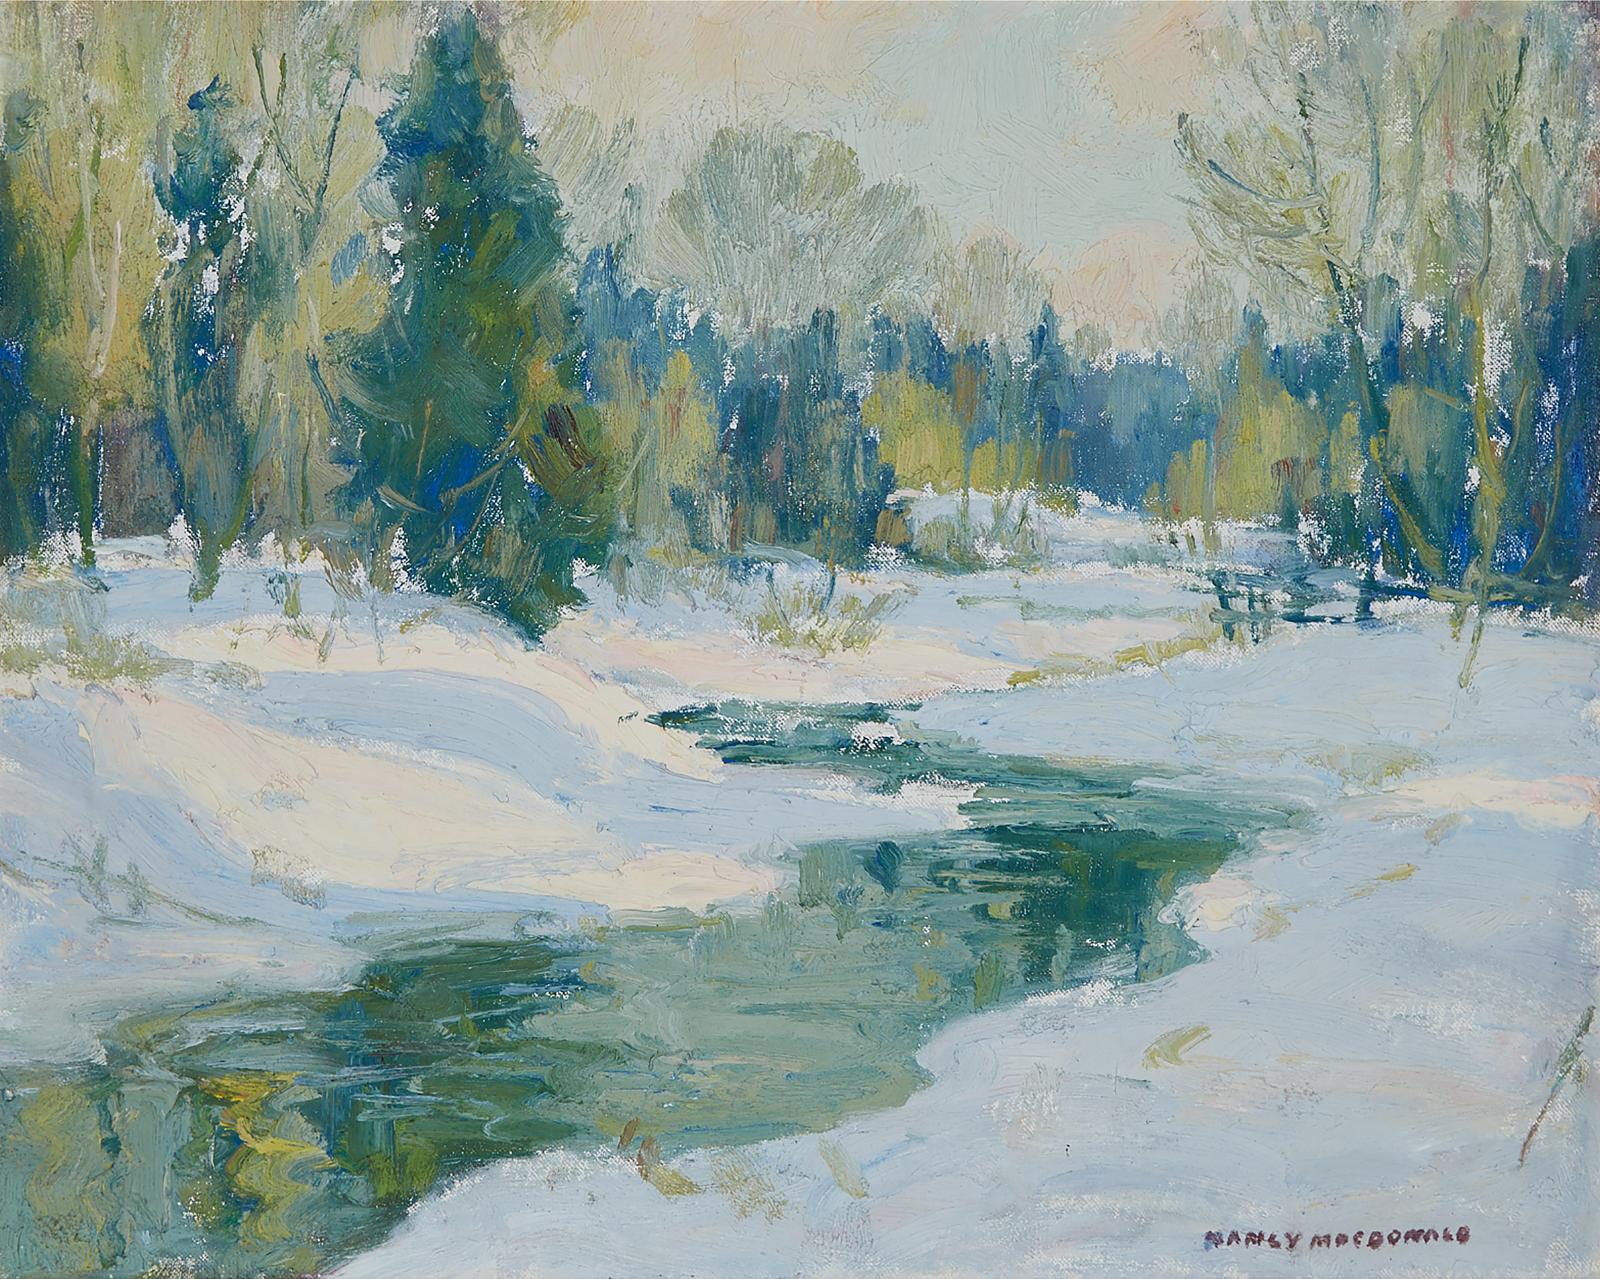 Manly Edward MacDonald (1889-1971) - Winter Landscape